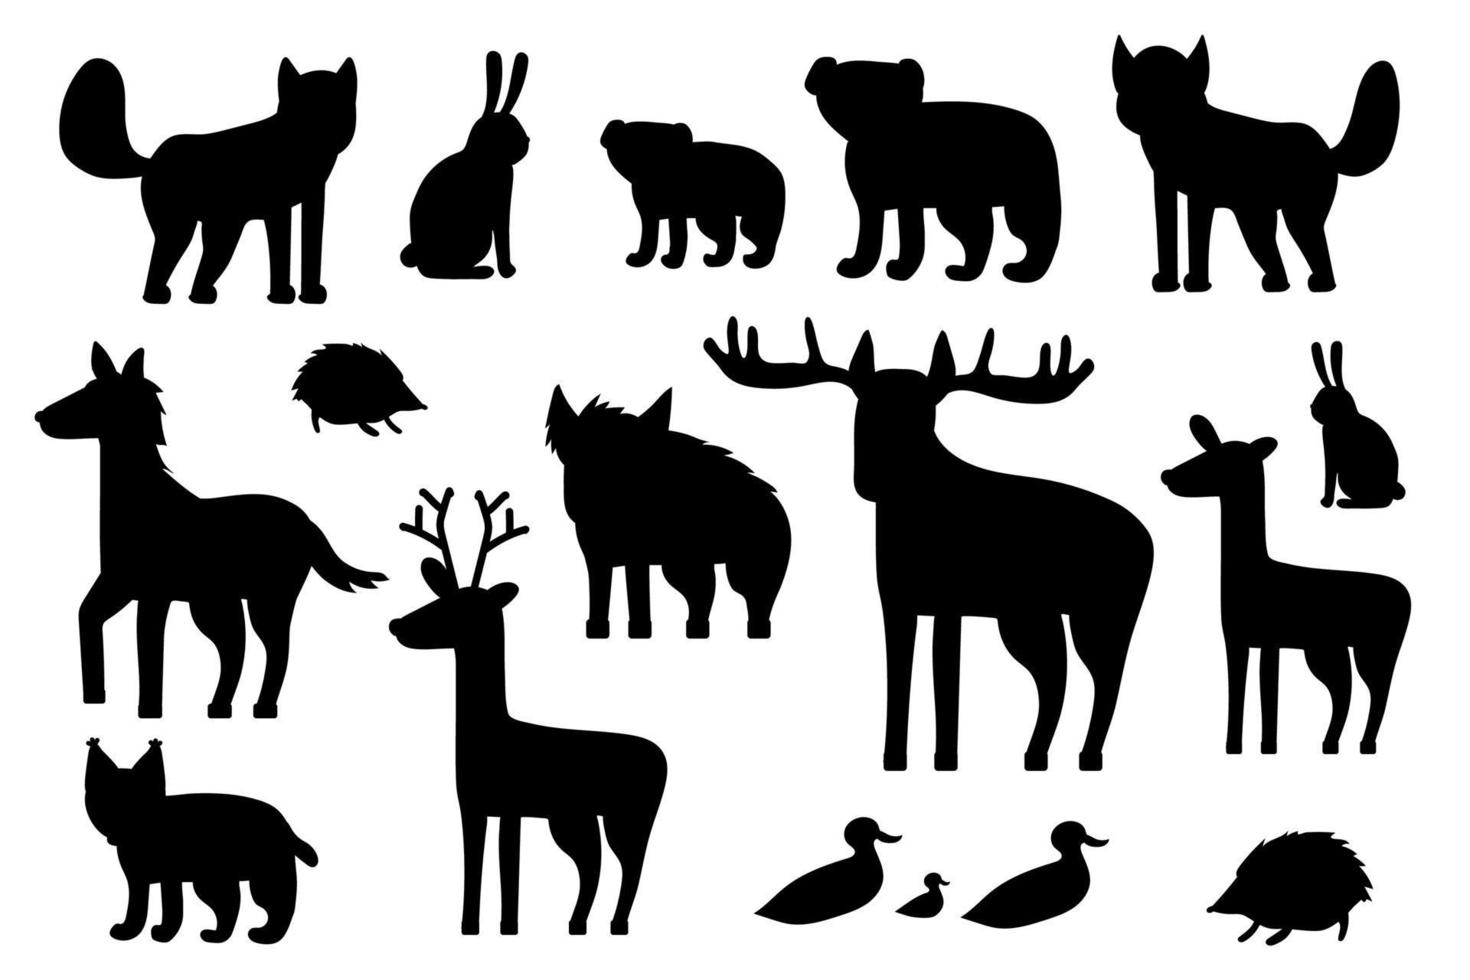 conjunto de animales del bosque de silueta negra. dibujos animados vector aislado zorro, lobo, oso, cachorro de oso, alce, venado, gamo, erizo, liebre, pato, patito, lince, caballo, jabalí